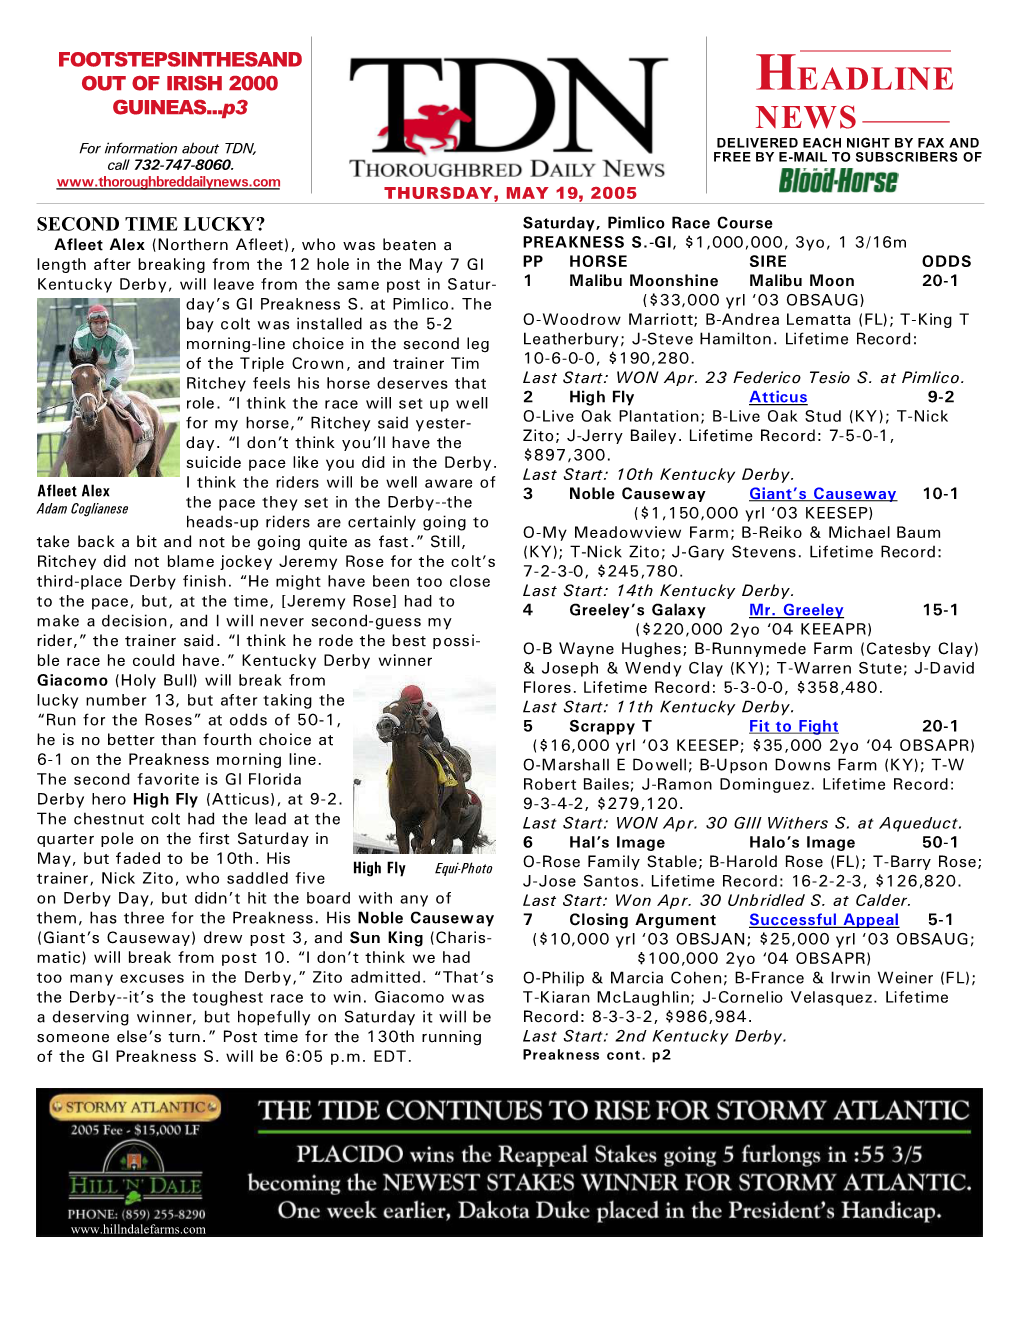 HEADLINE NEWS • 5/19/05 • PAGE 2 of 3